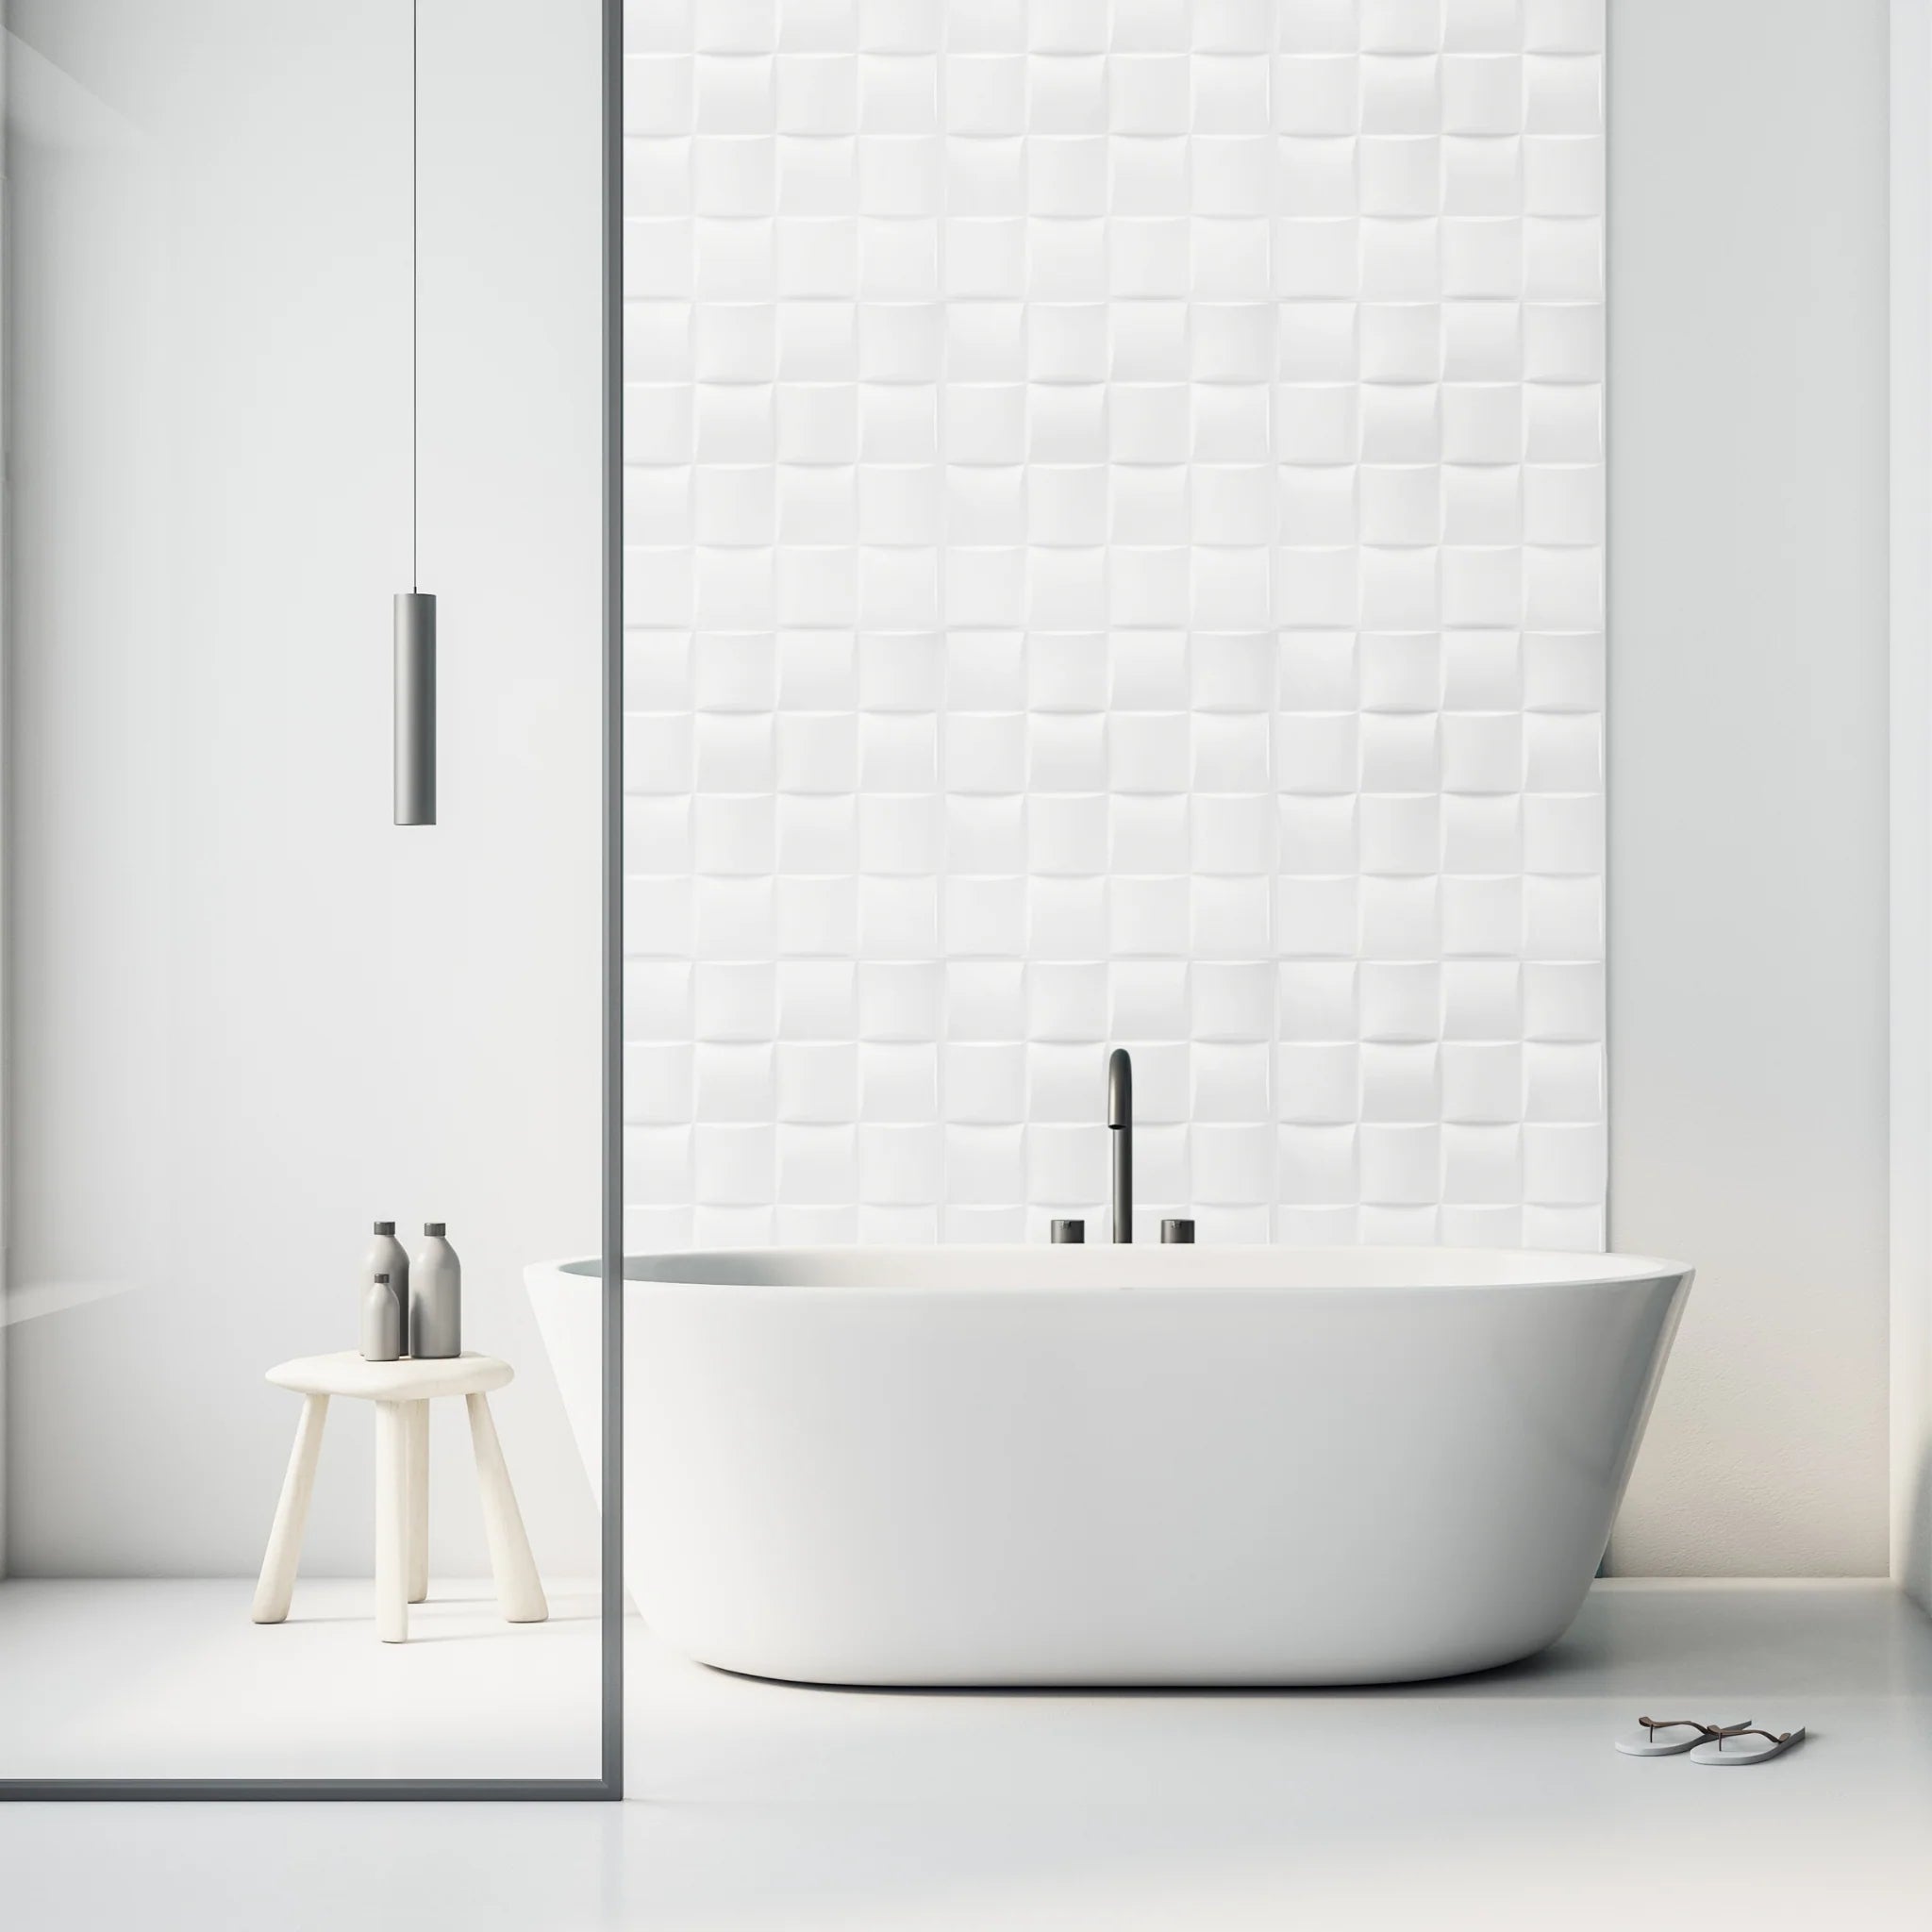 White 50x50 cm PVC wall panel in minimalist bathroom setting